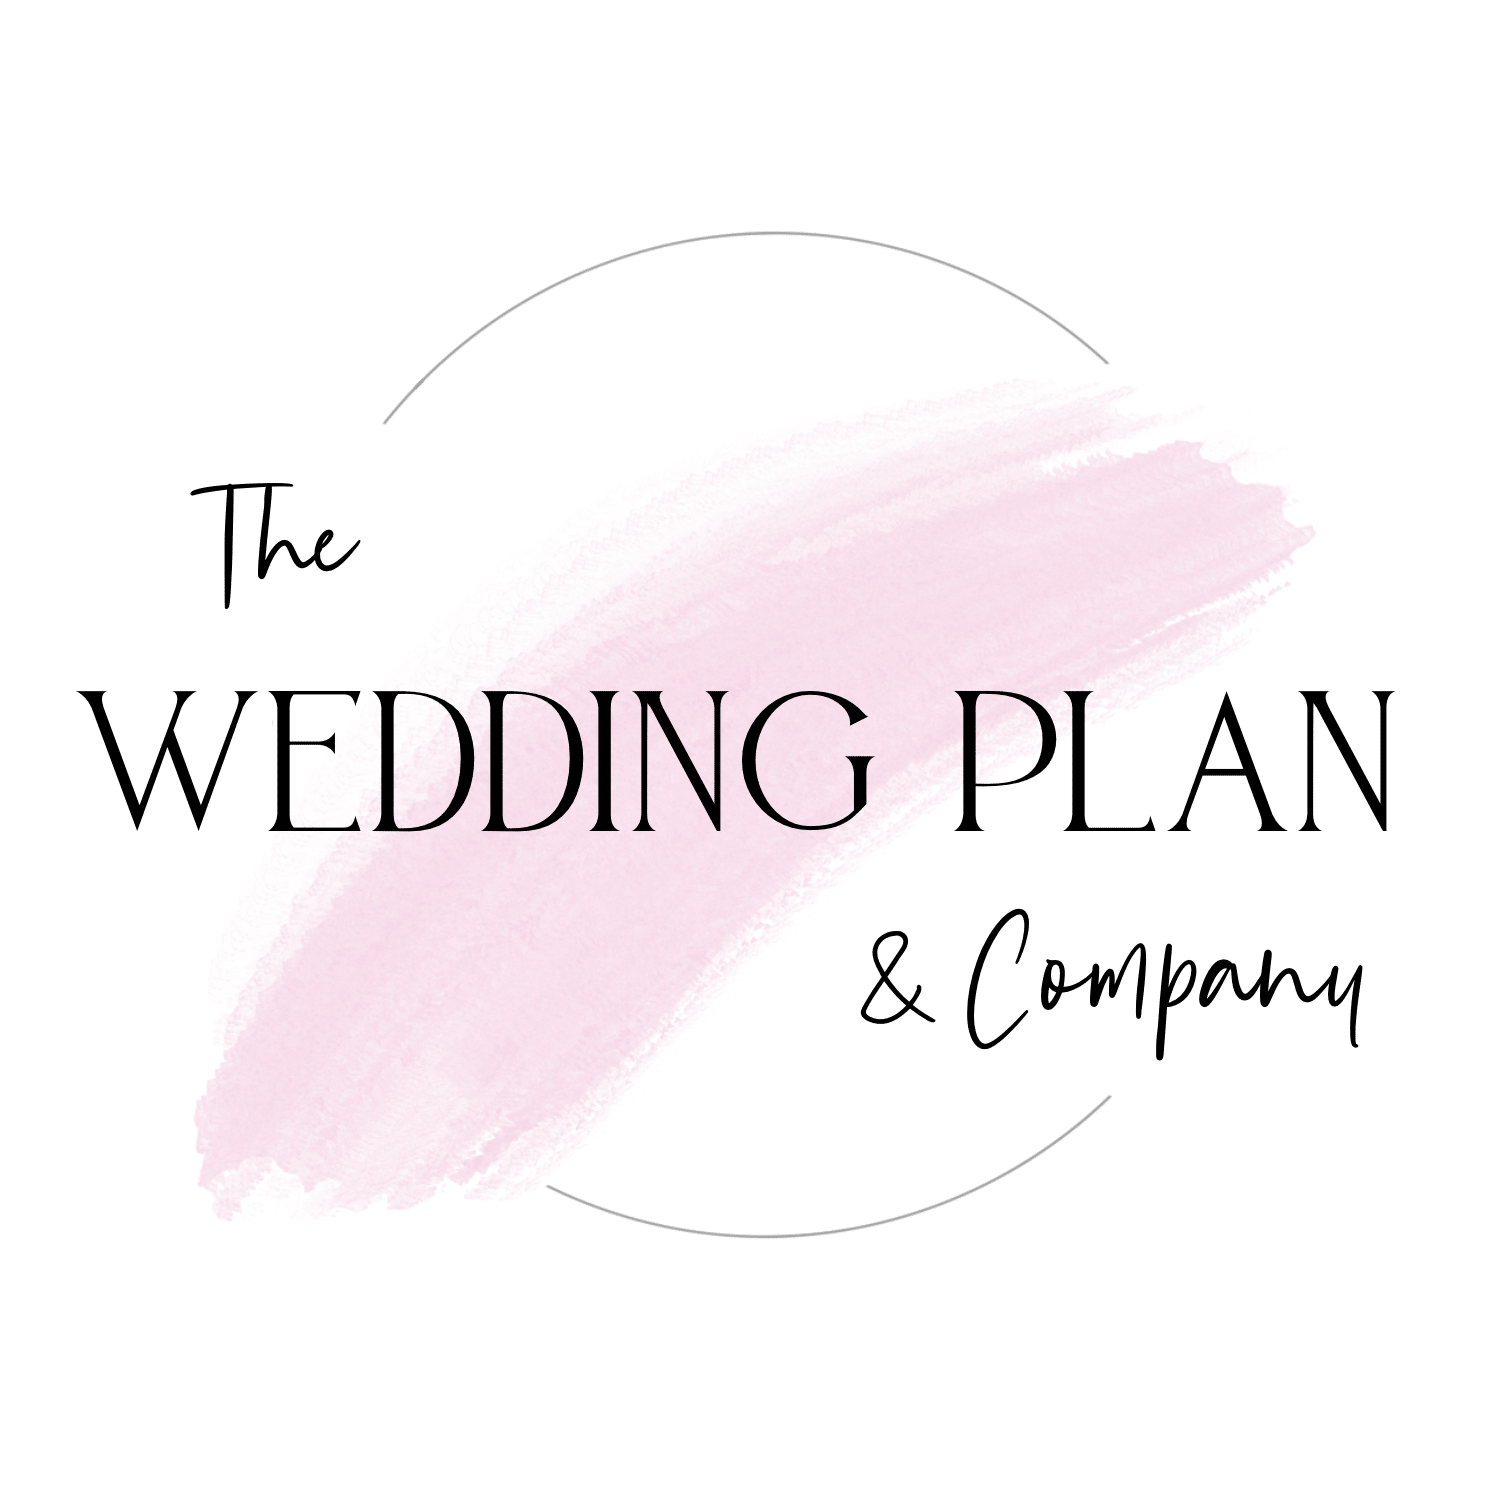 The Wedding Plan Company Logo